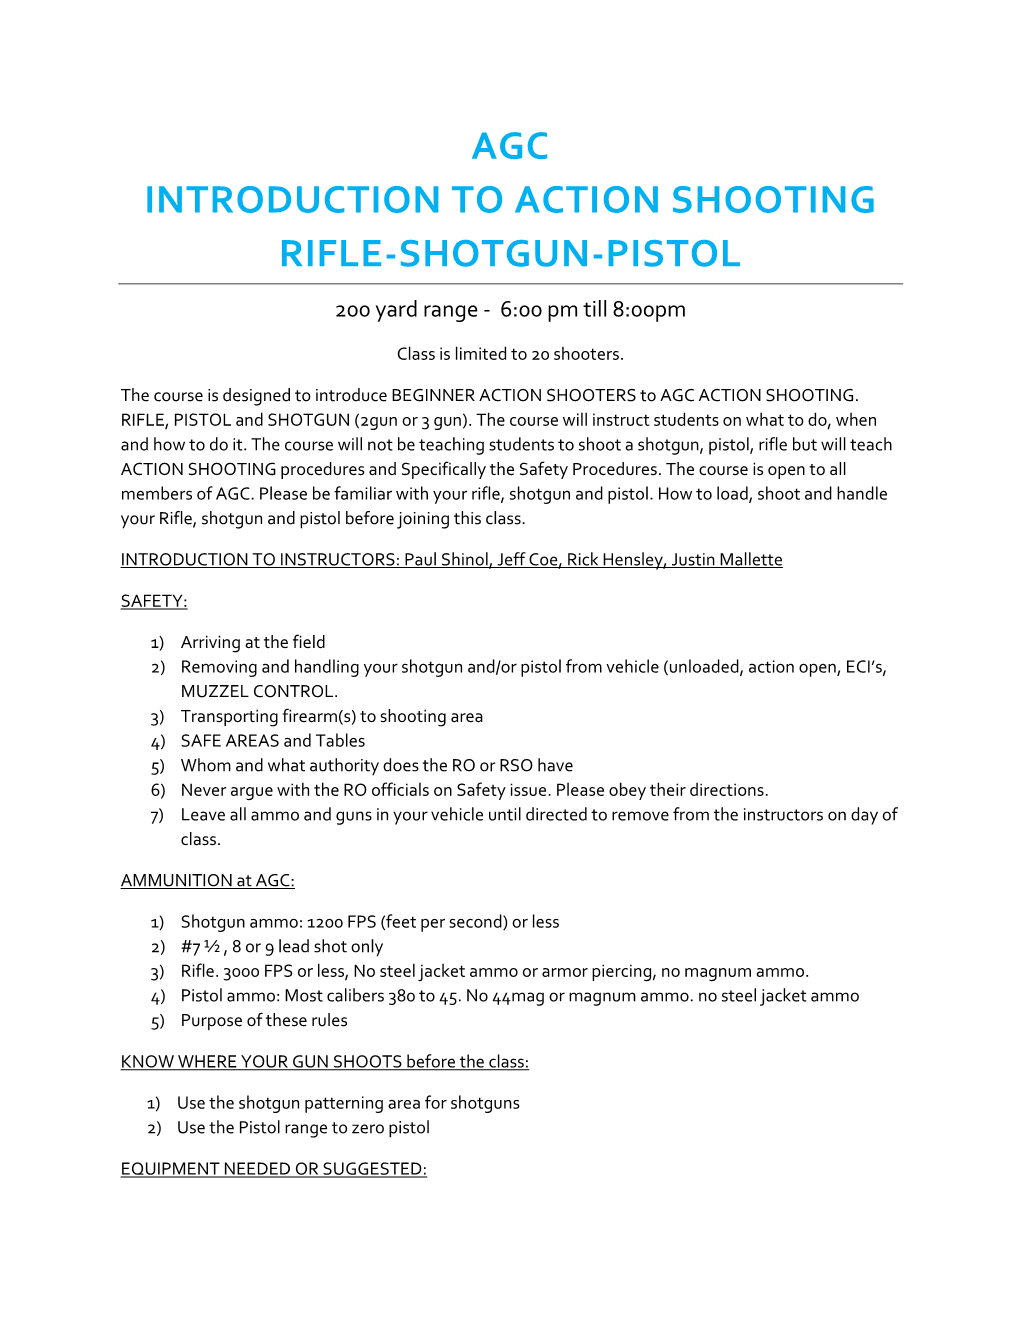 AGC INTRODUCTION to ACTION SHOOTING RIFLE-SHOTGUN-PISTOL 200 Yard Range - 6:00 Pm Till 8:00Pm